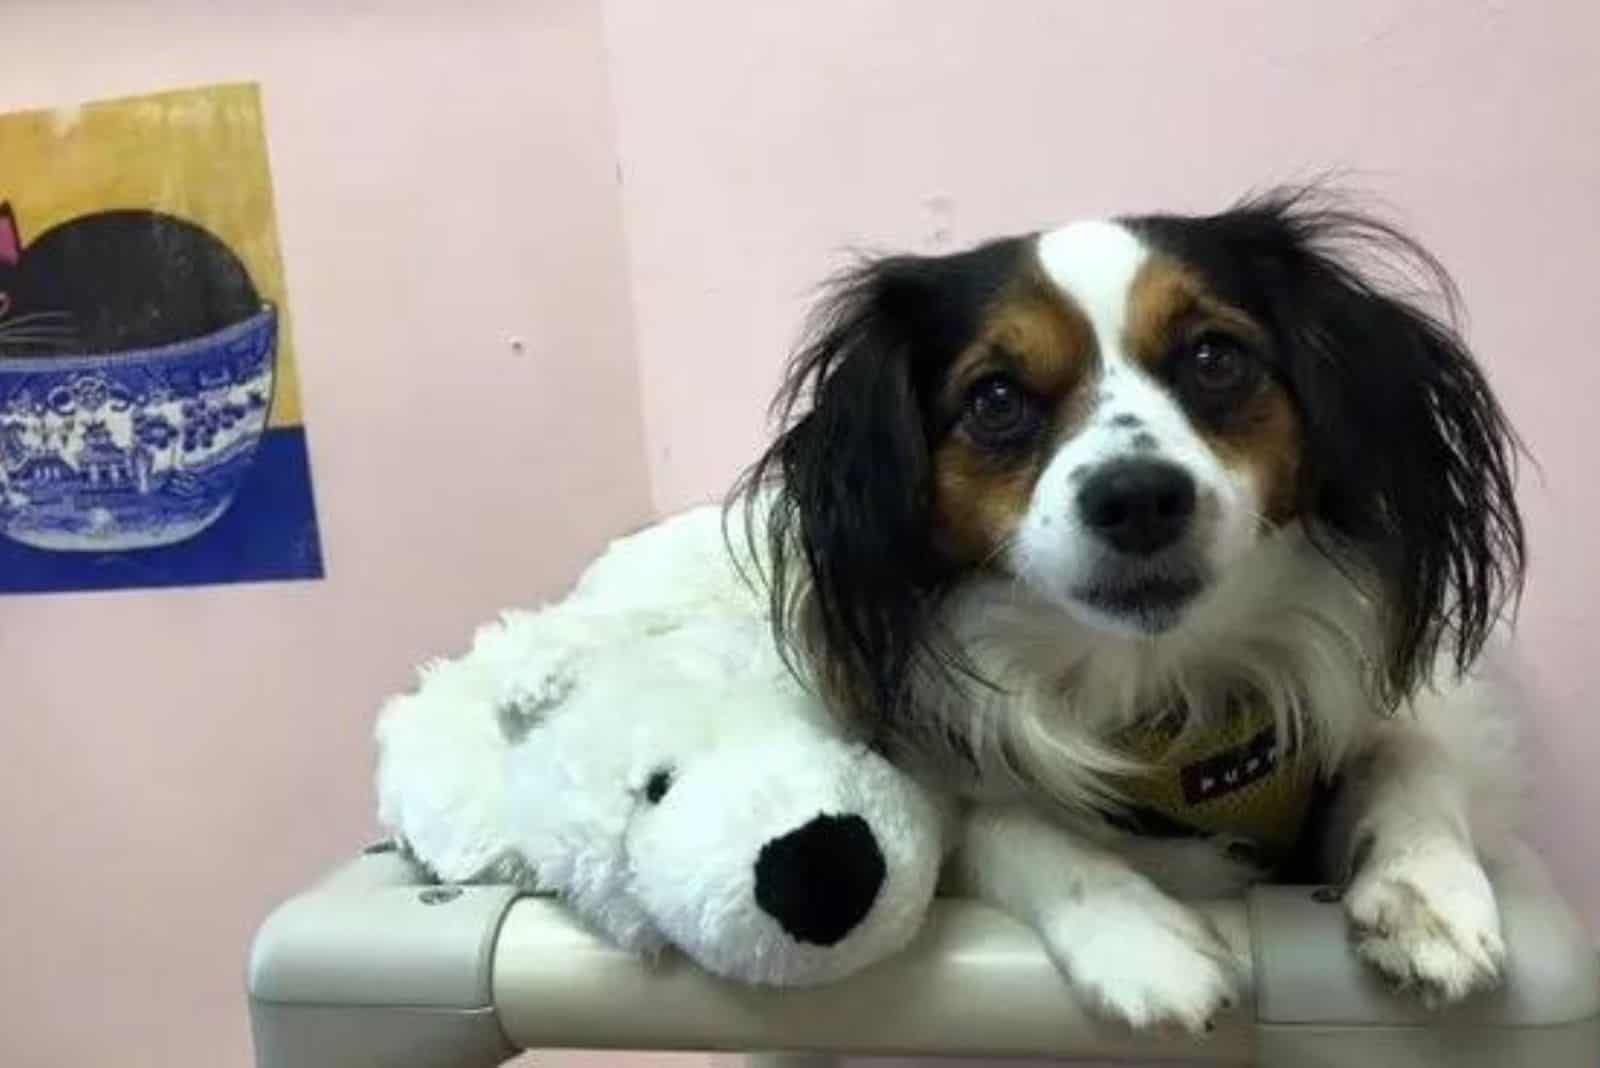 portrait of a dog with a teddy bear